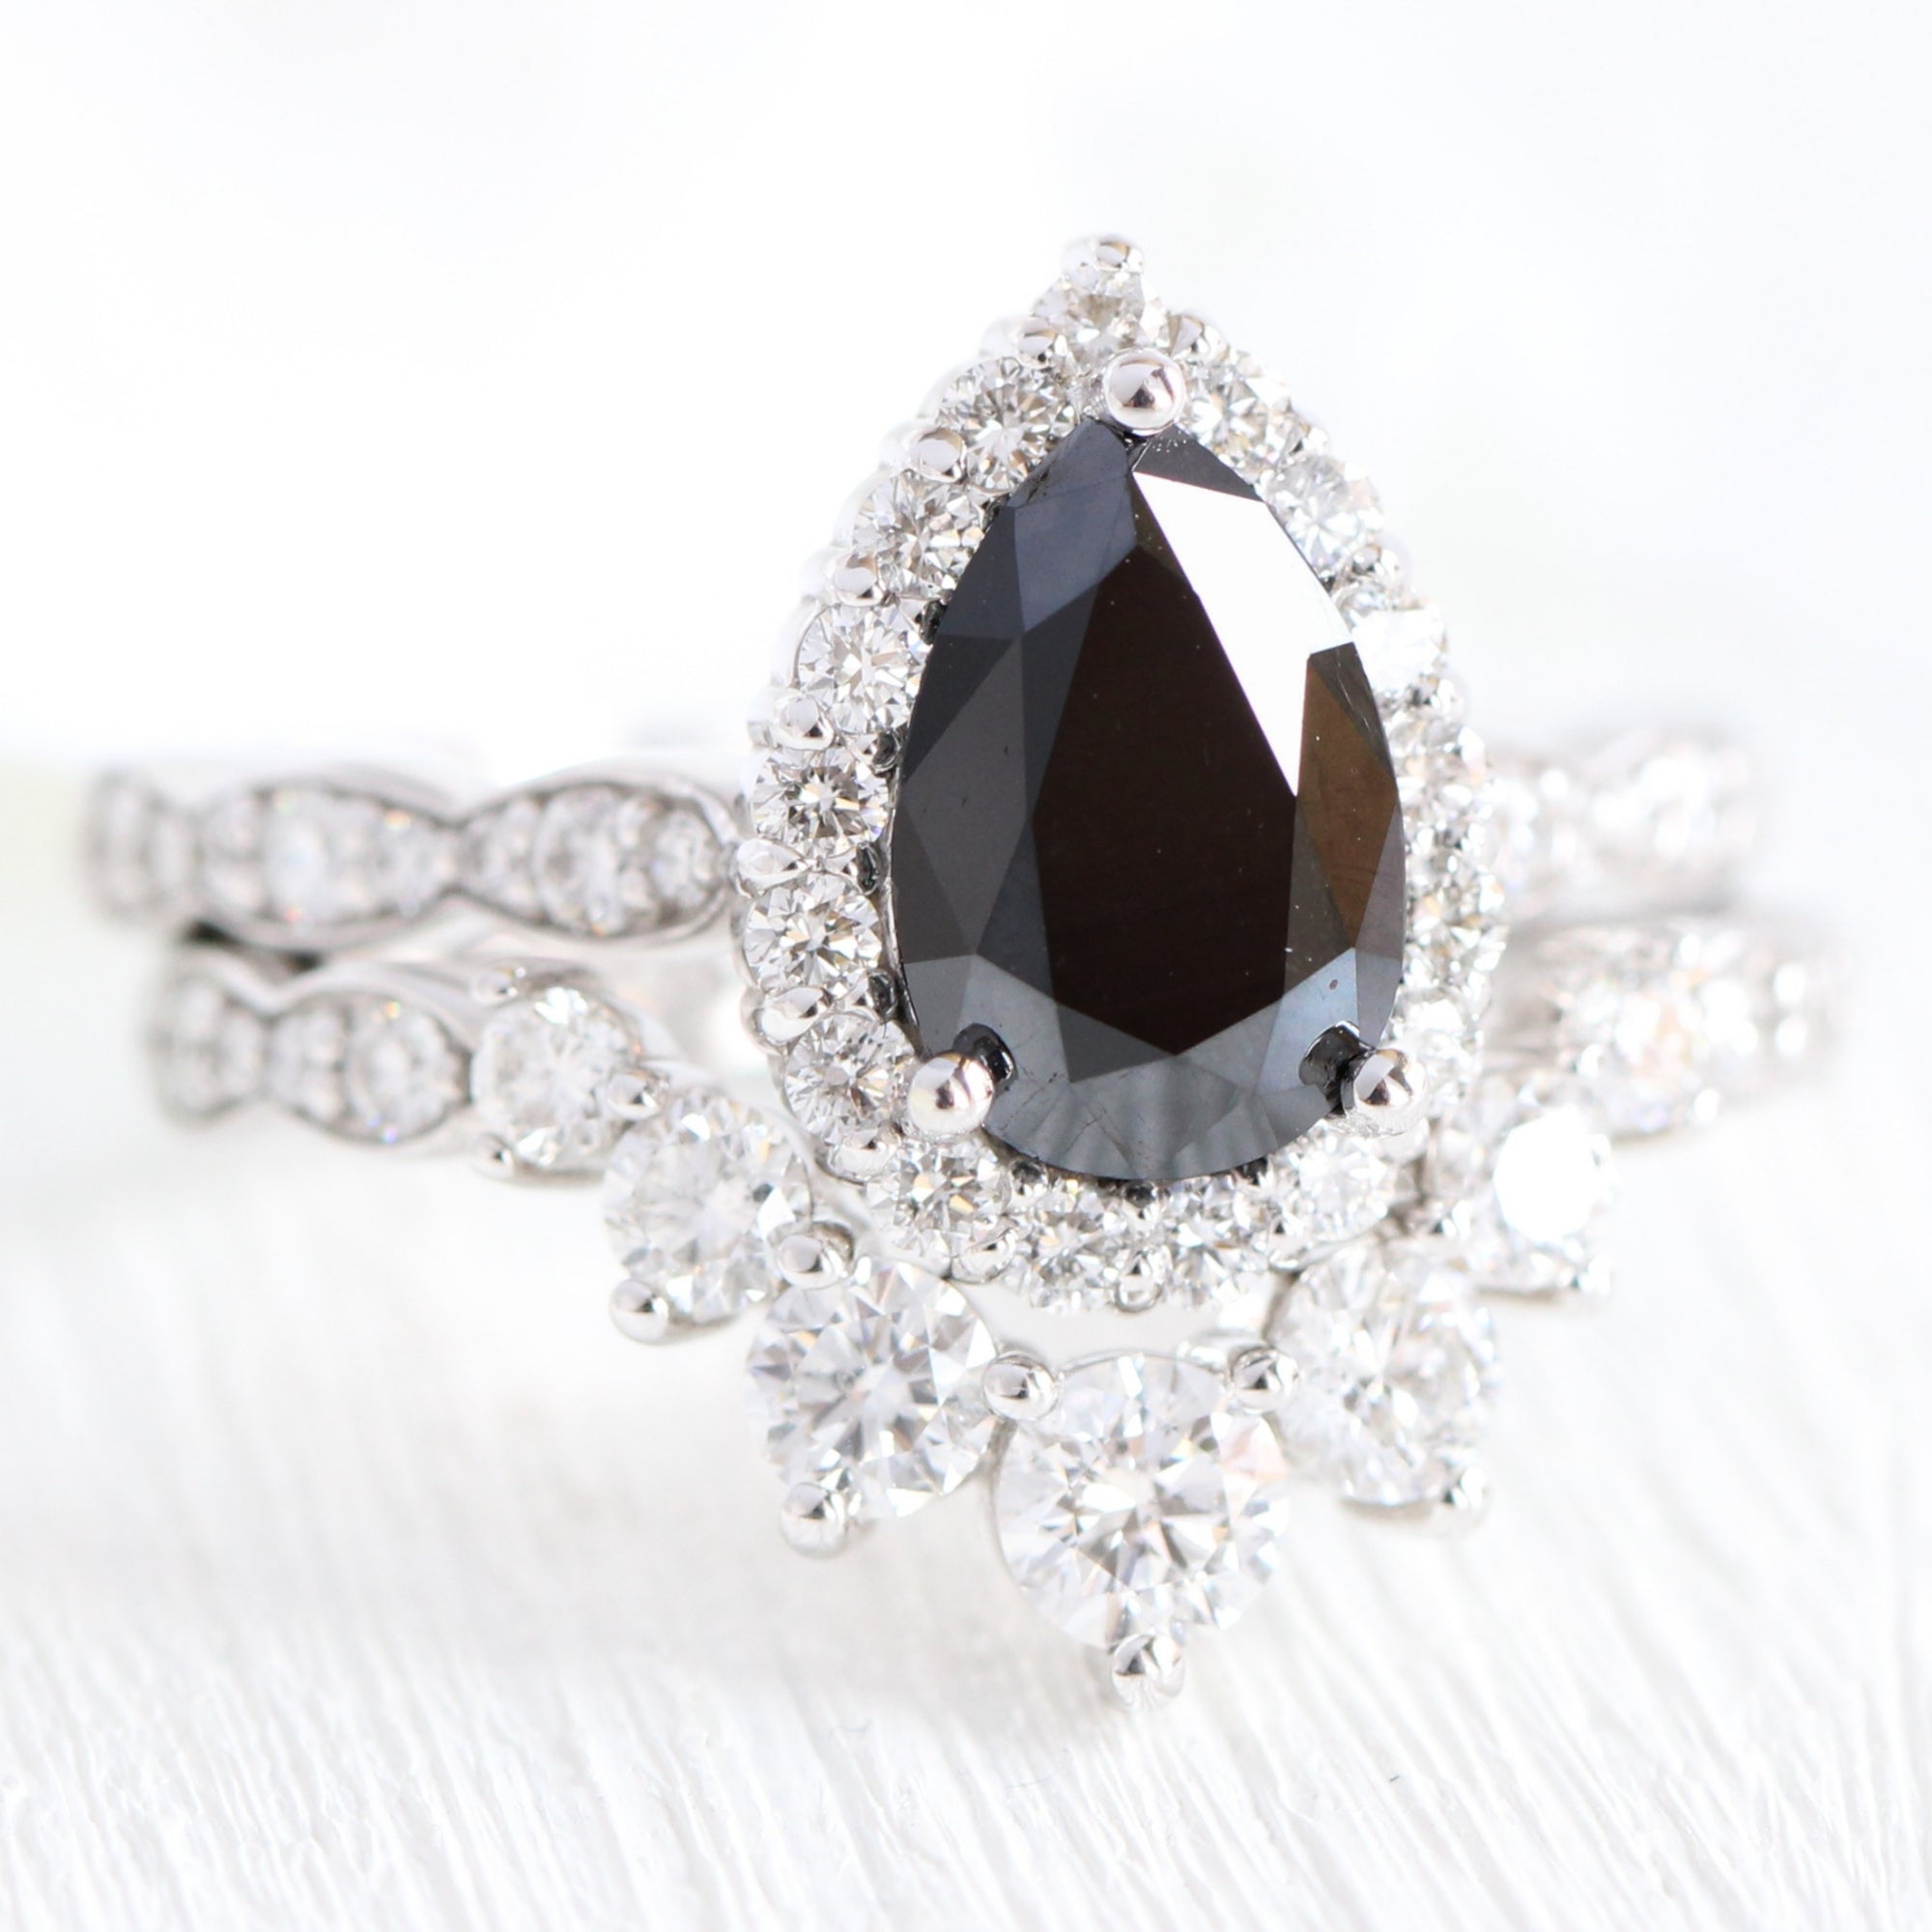 Pear black diamond engagement ring white gold large diamond wedding band bridal ring set la more design jewelry